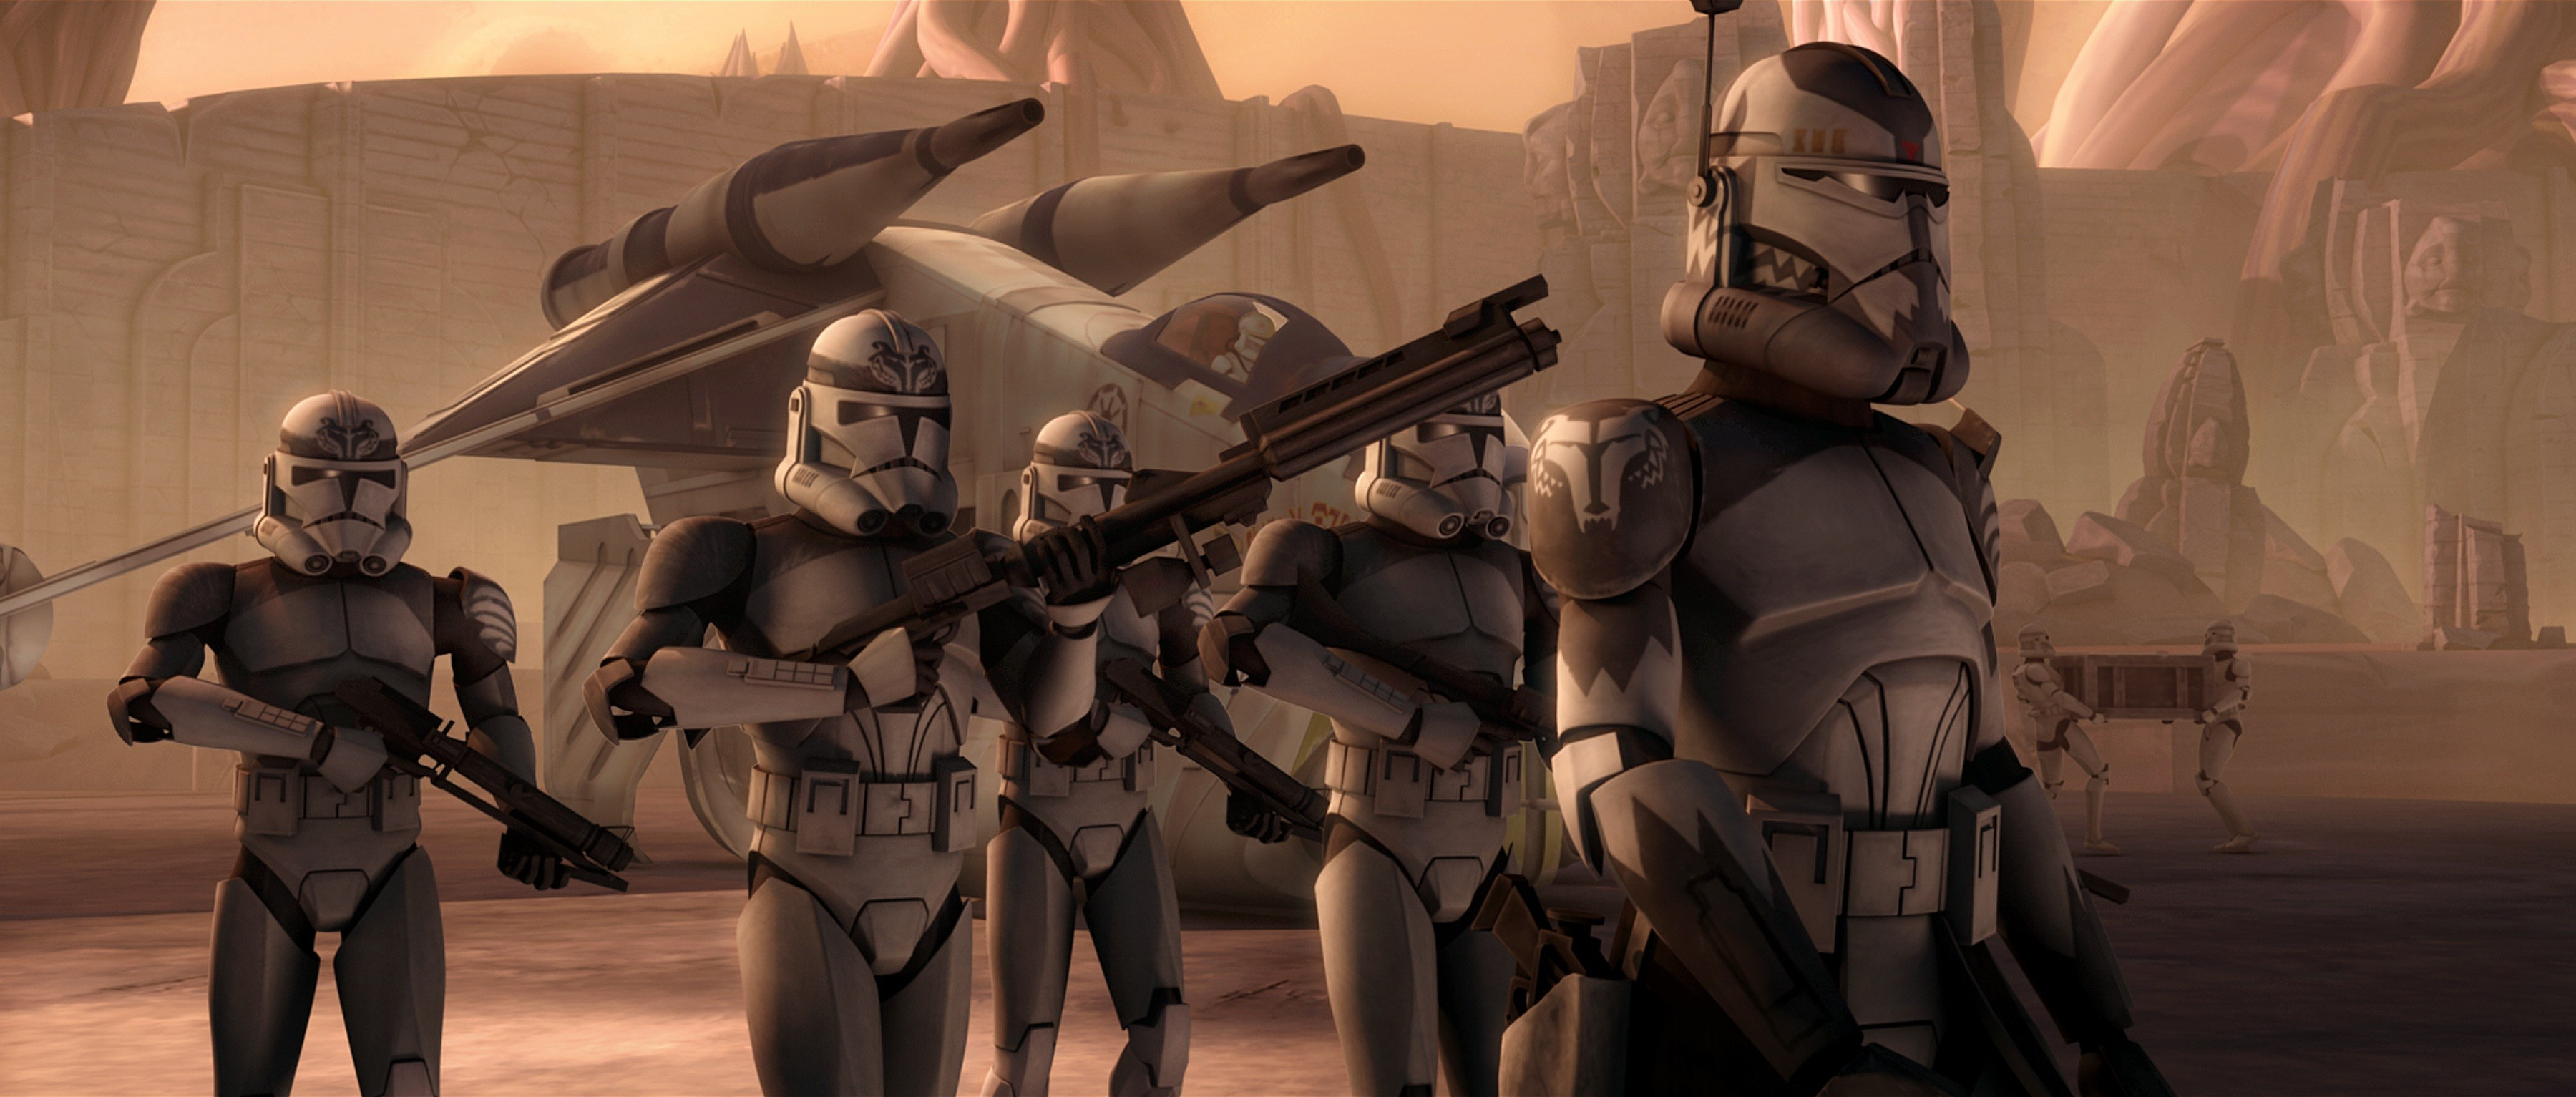 #Star Wars, #clone trooper, wallpaper. Mocah HD Wallpaper